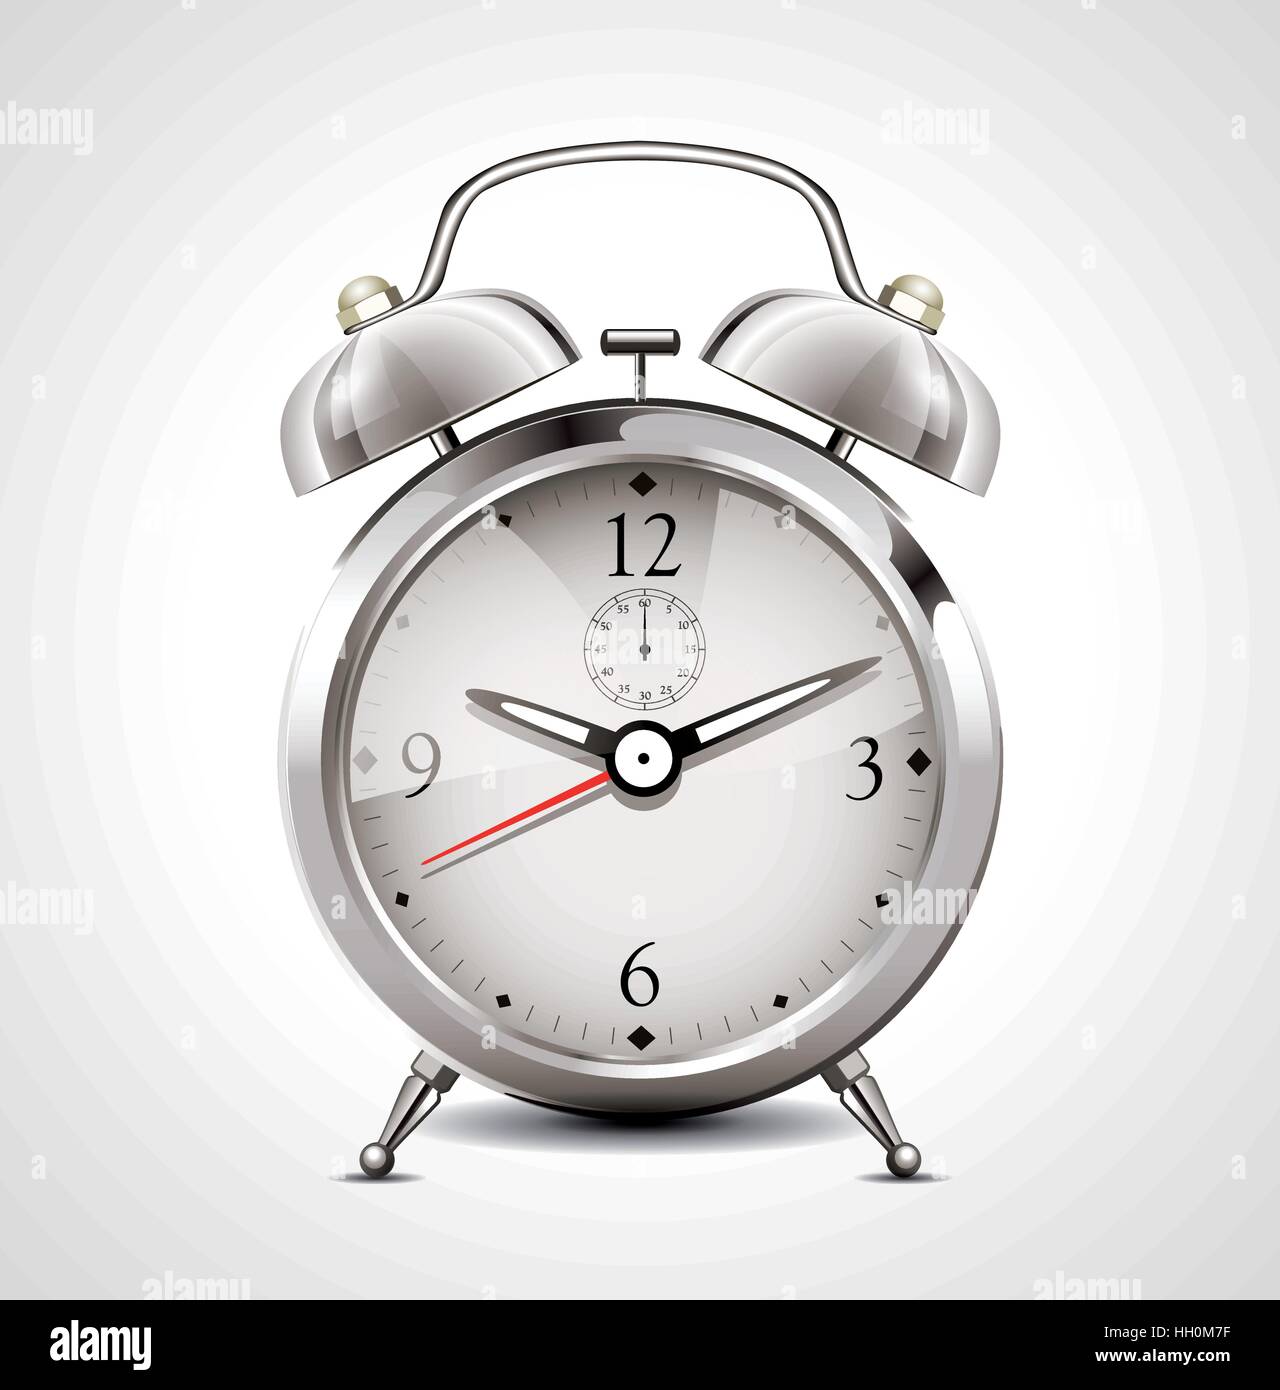 Digital Alarm Clock Vector Illustration Isolated On White Background Stock  Illustration - Download Image Now - iStock